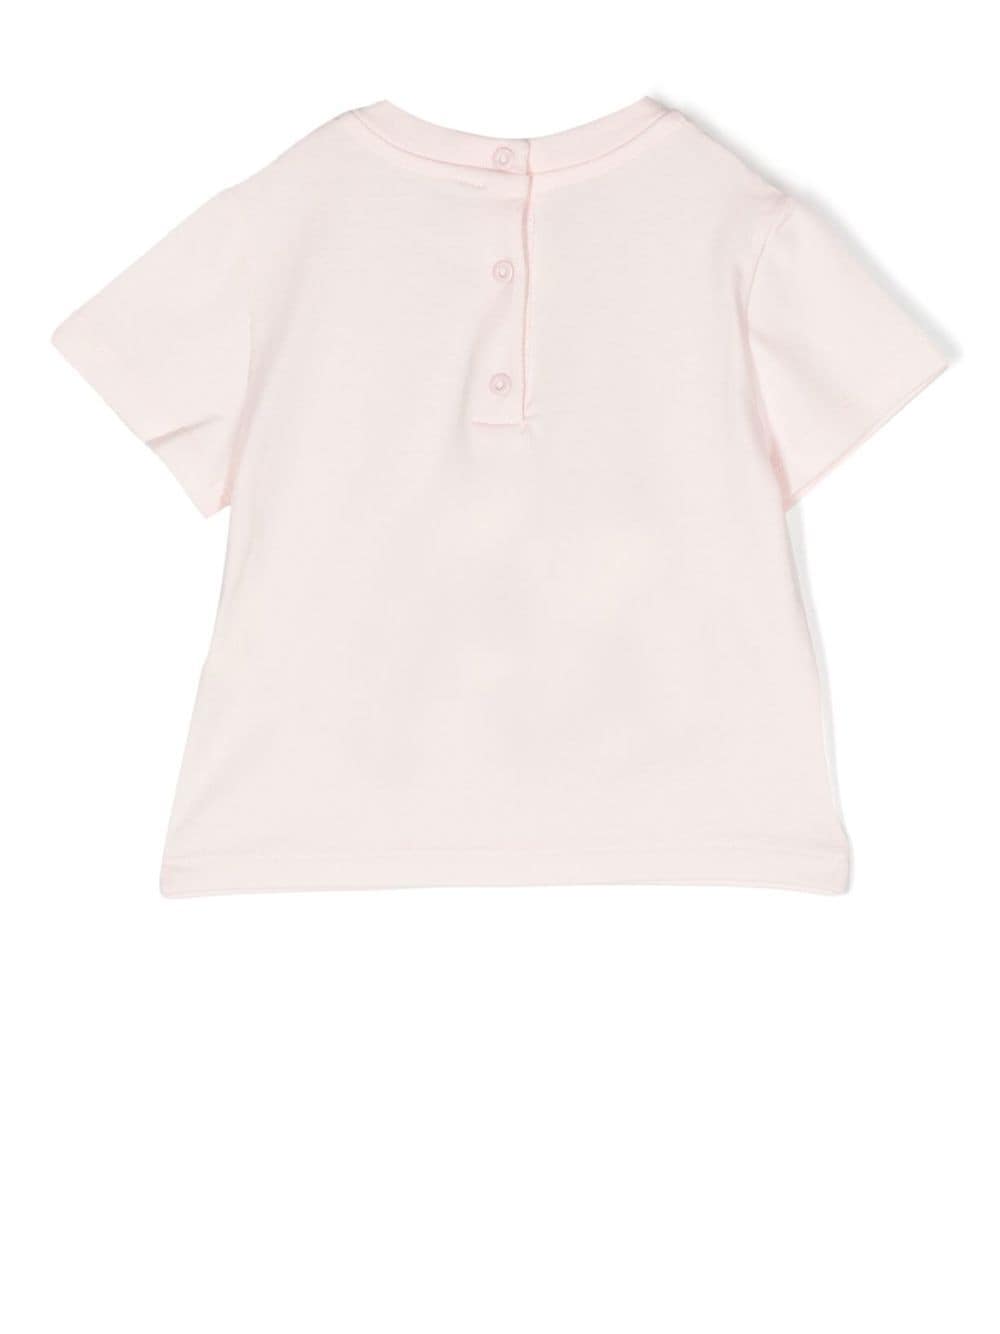 T-shirt rosa con stampa logata frontale